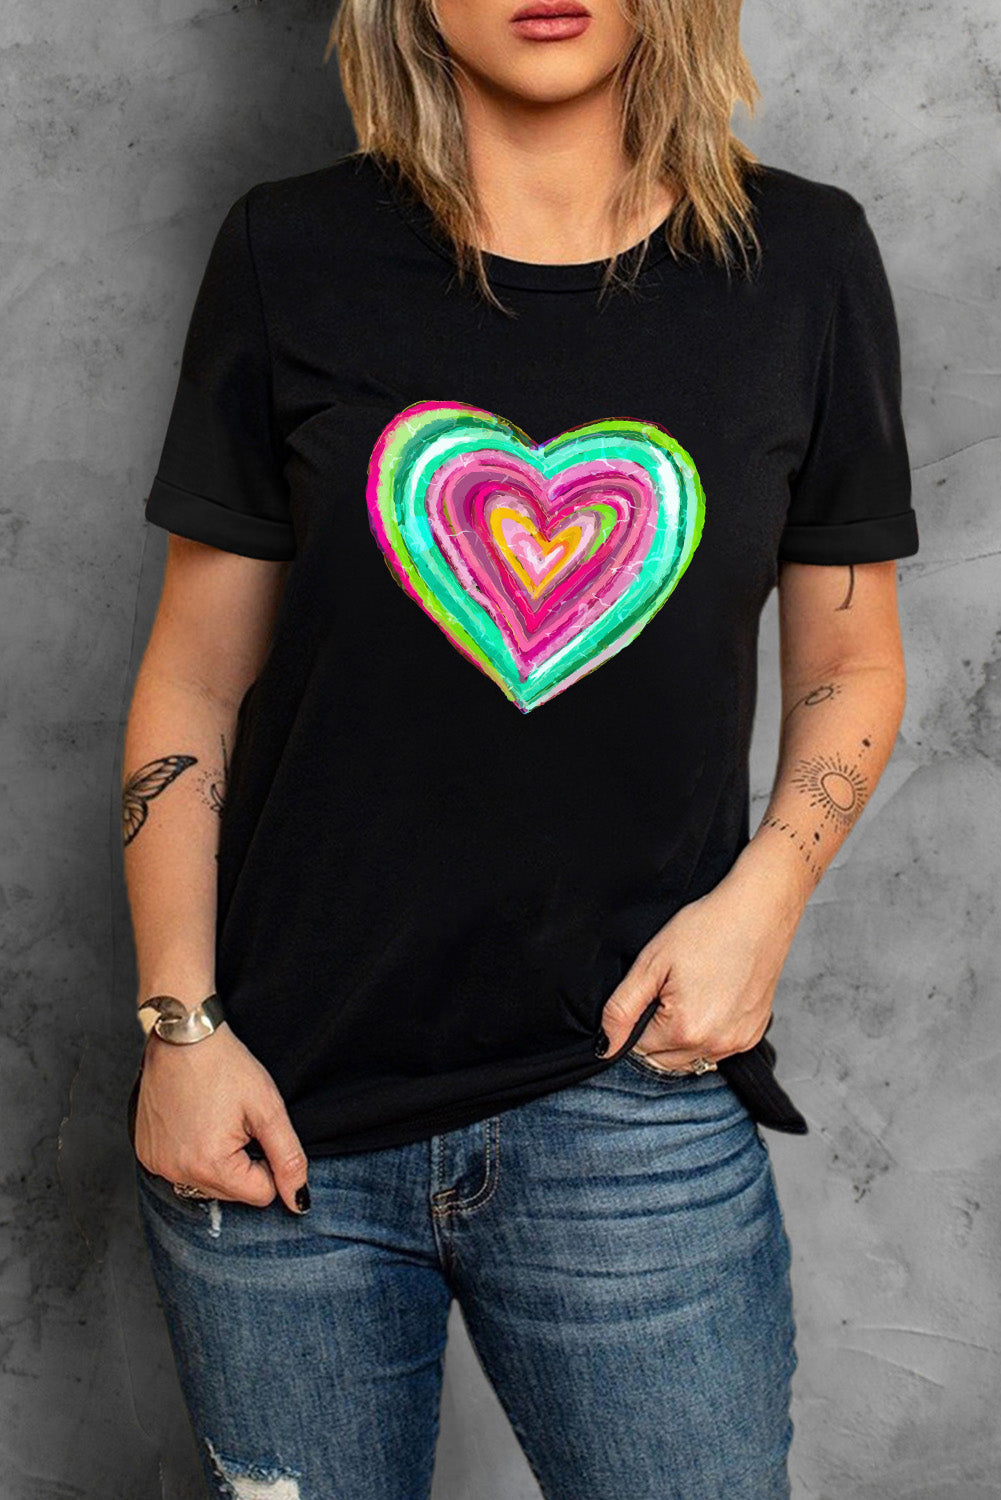 LC25224028-2-S, LC25224028-2-M, LC25224028-2-L, LC25224028-2-XL, LC25224028-2-2XL, Black Valentines Day Shirts Heart Shaped Print Crew Neck T Shirt